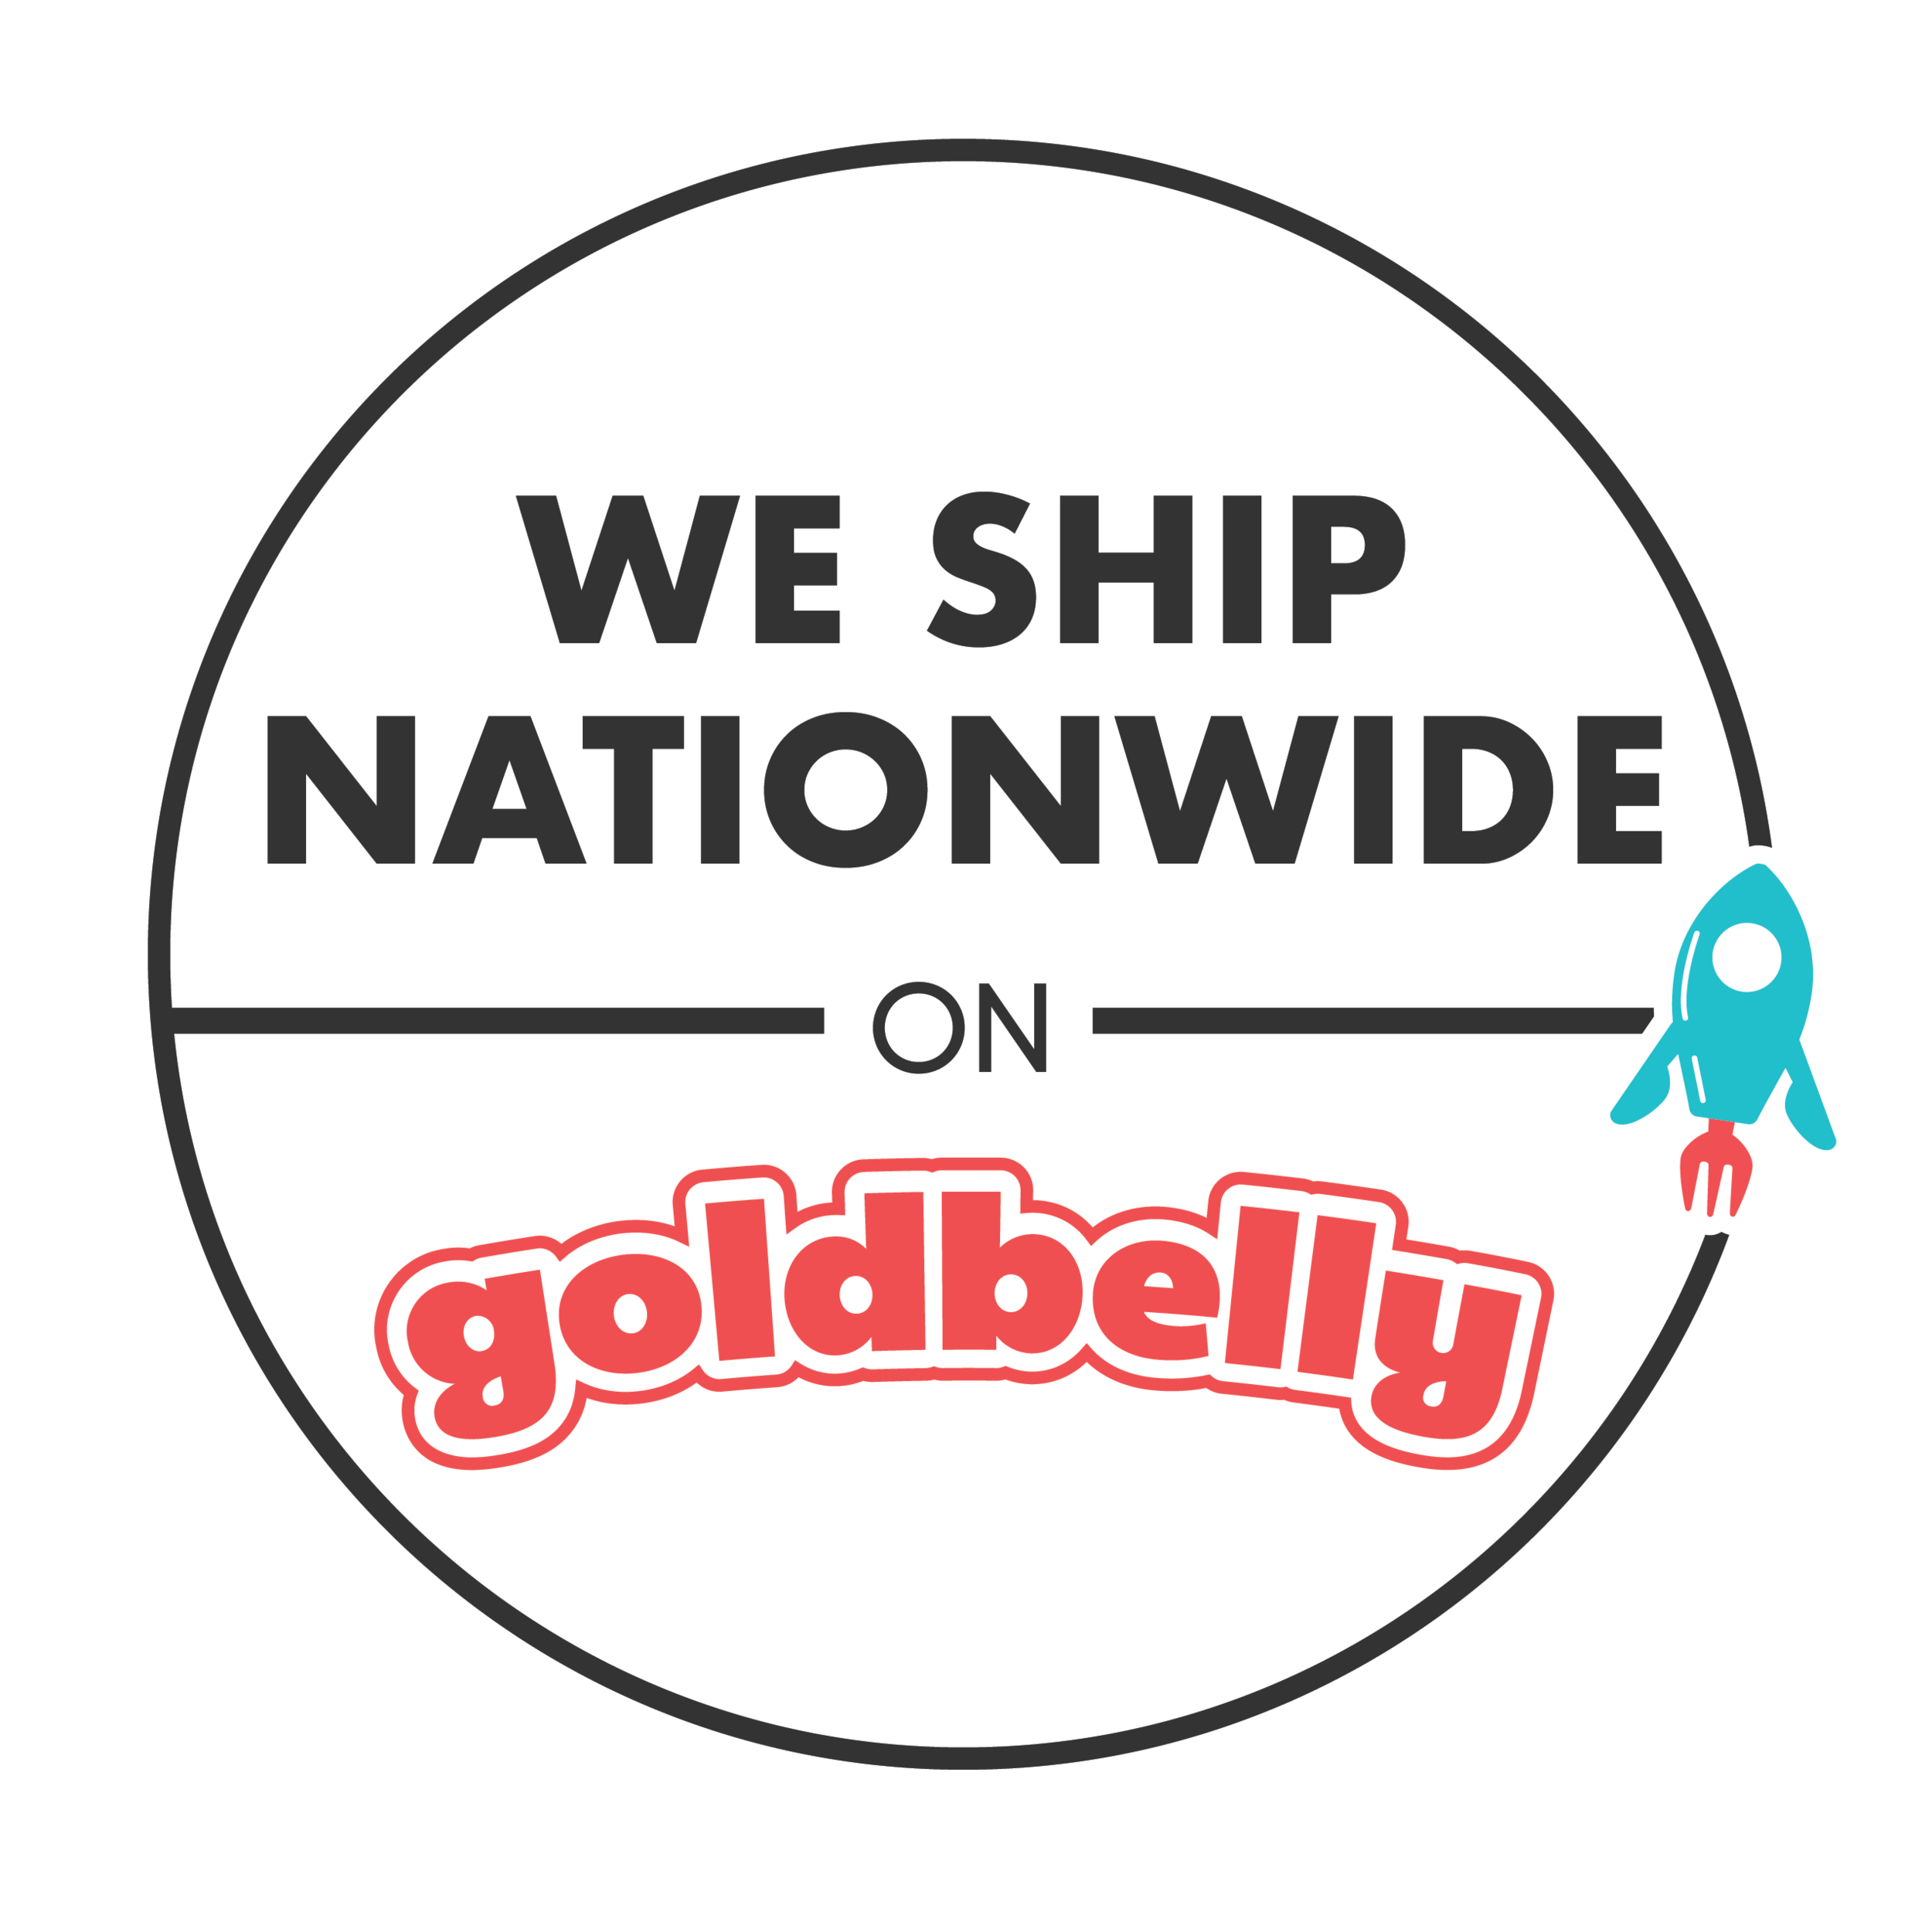 Goldbelly-We-Ship-Nationwide-on-Goldbelly-Circle-White-V2-01.png